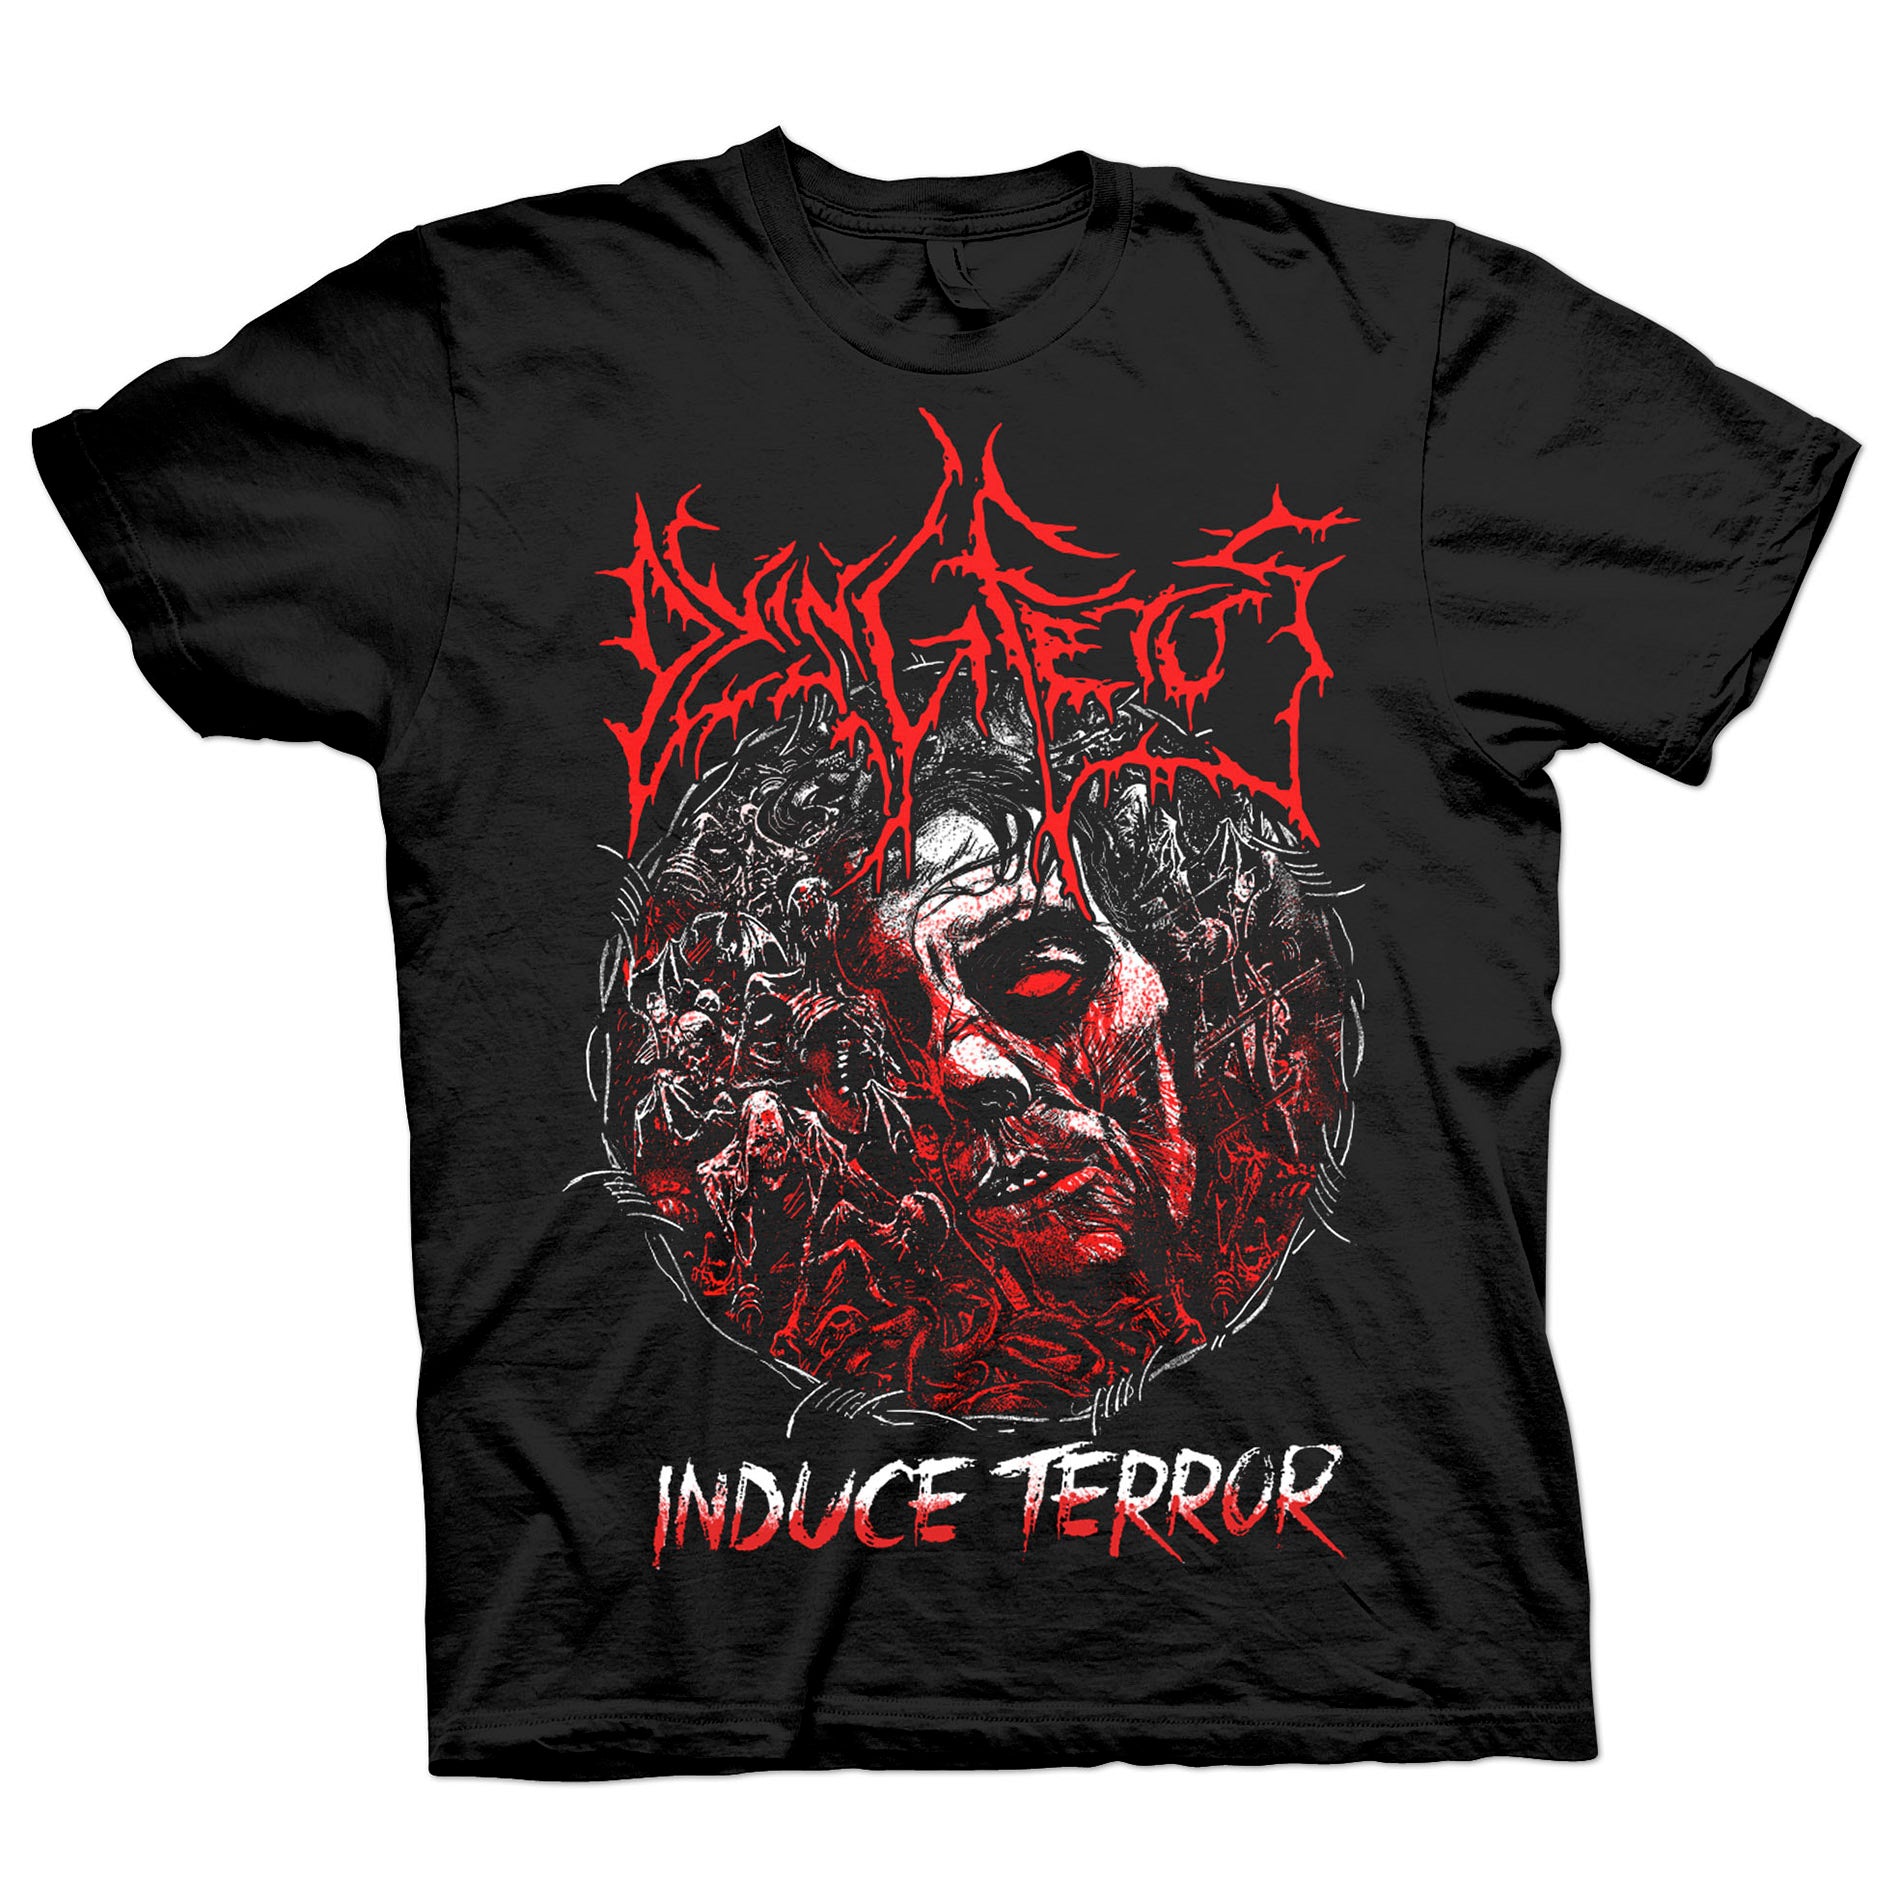 Dying Fetus "Induce Terror" T-Shirt